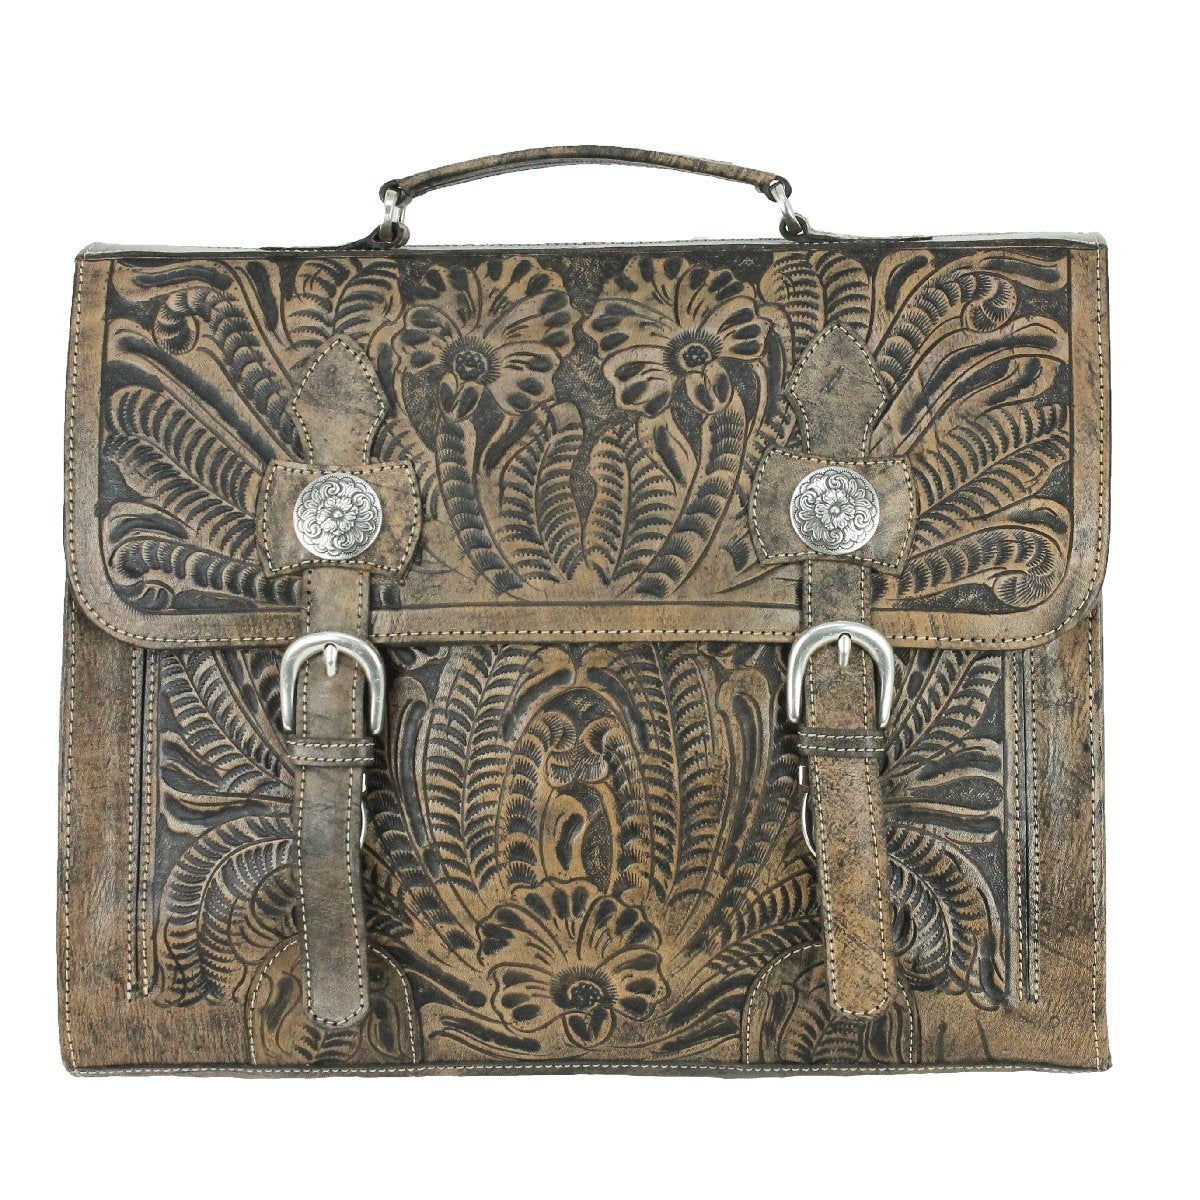 American West Handbag, Retro Travel Luggage, Laptop Briefcase Distressed Grey Front